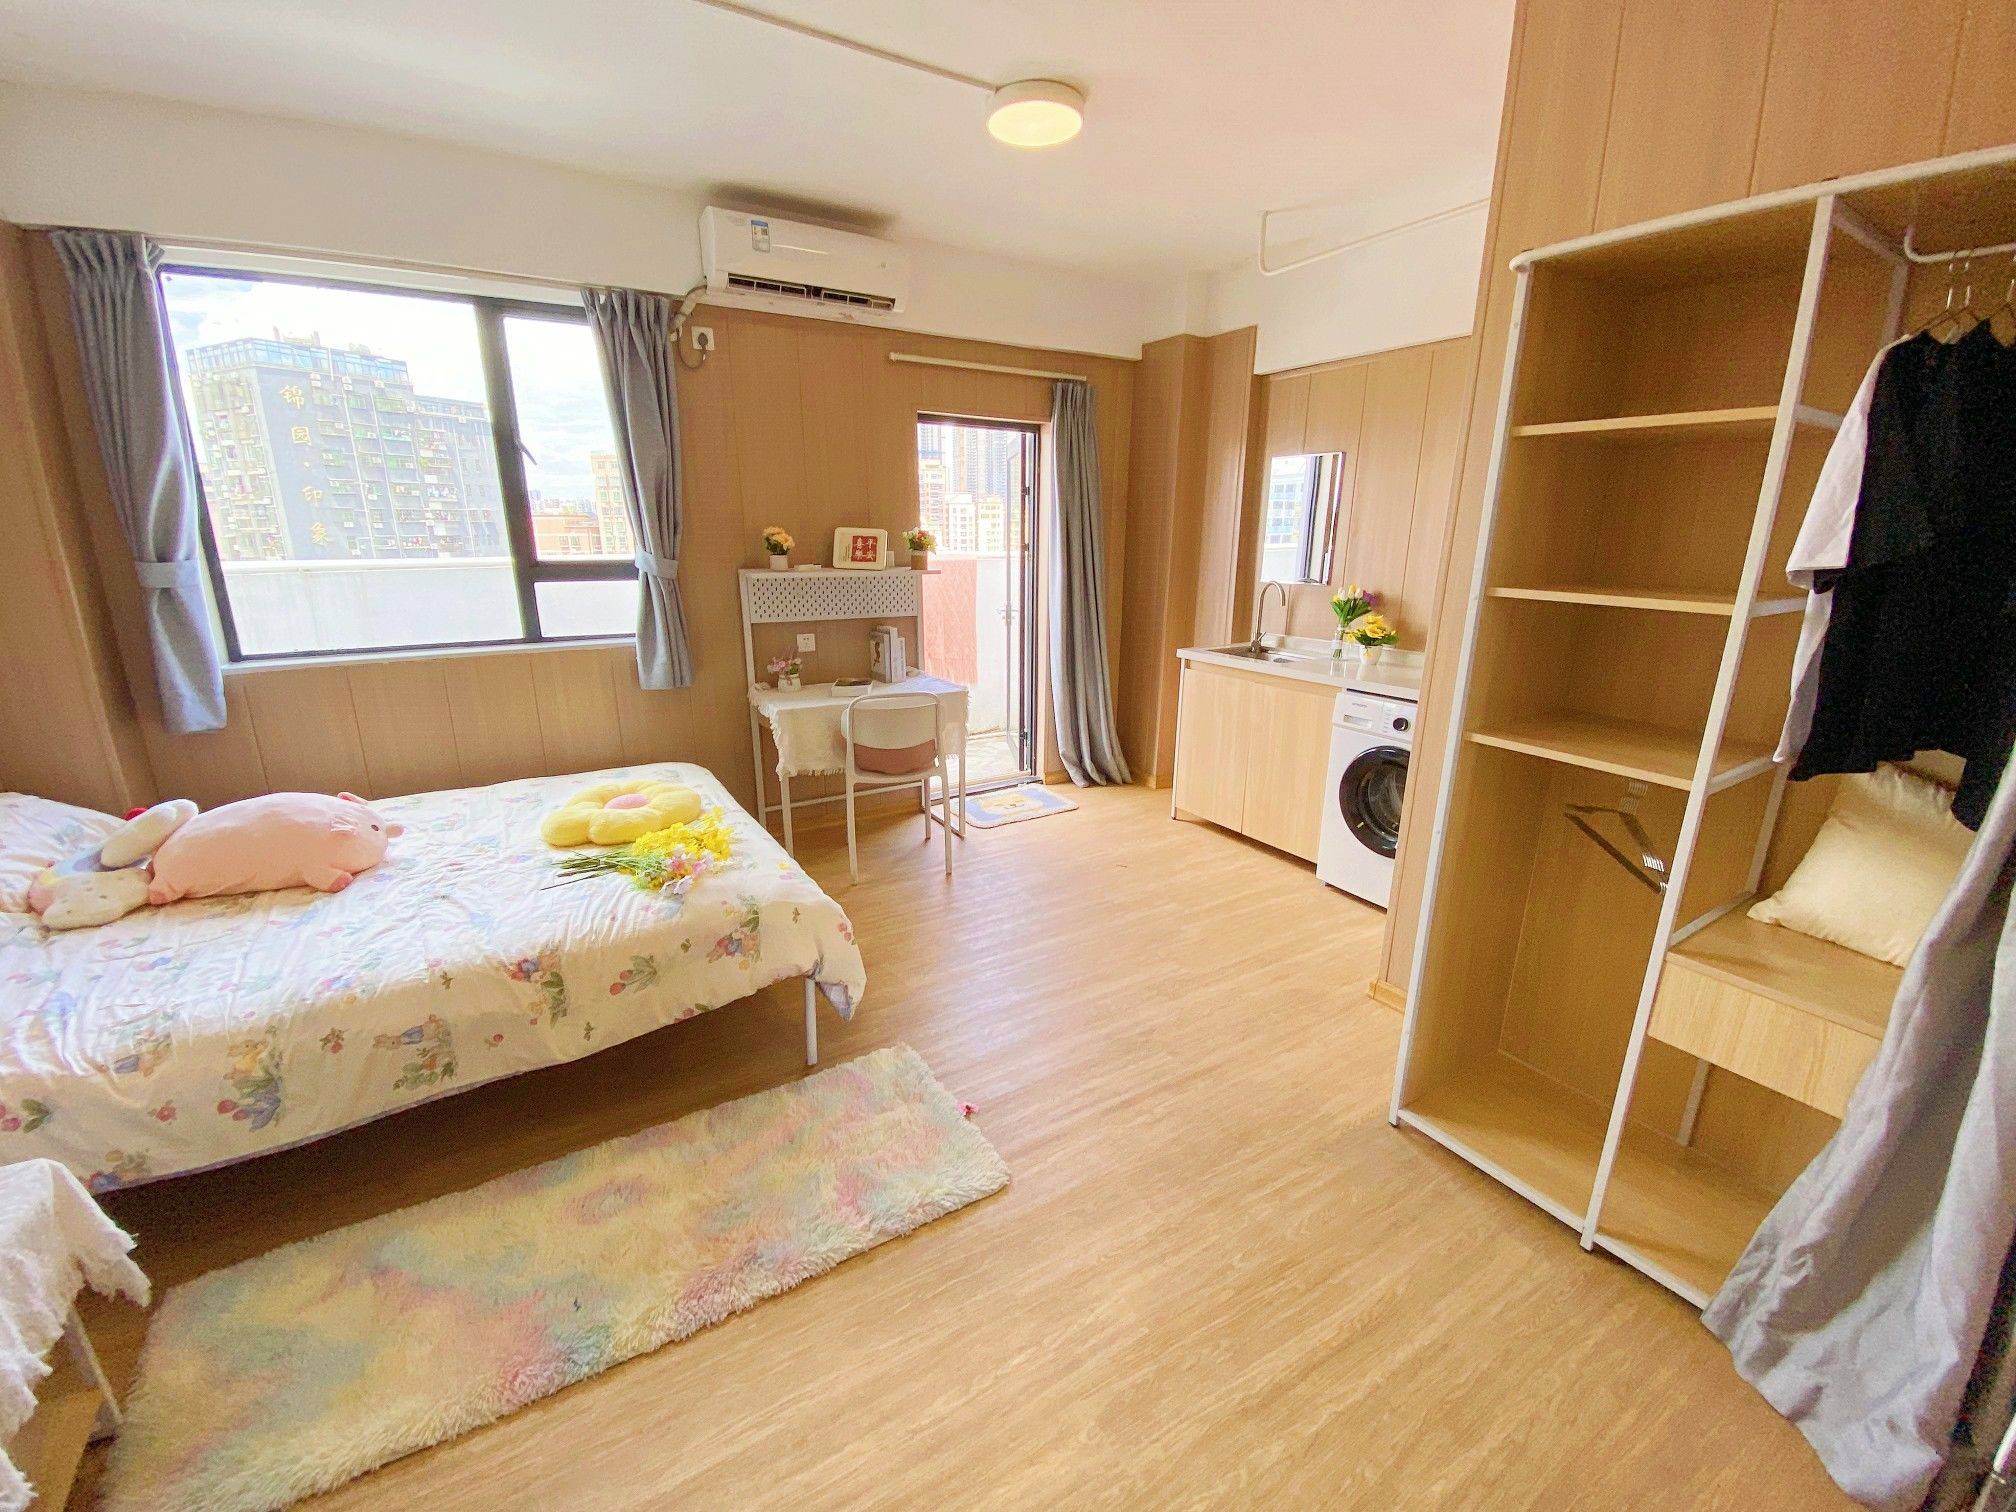 Shenzhen-Longhua-Cozy Home,Clean&Comfy,No Gender Limit,Hustle & Bustle,Chilled